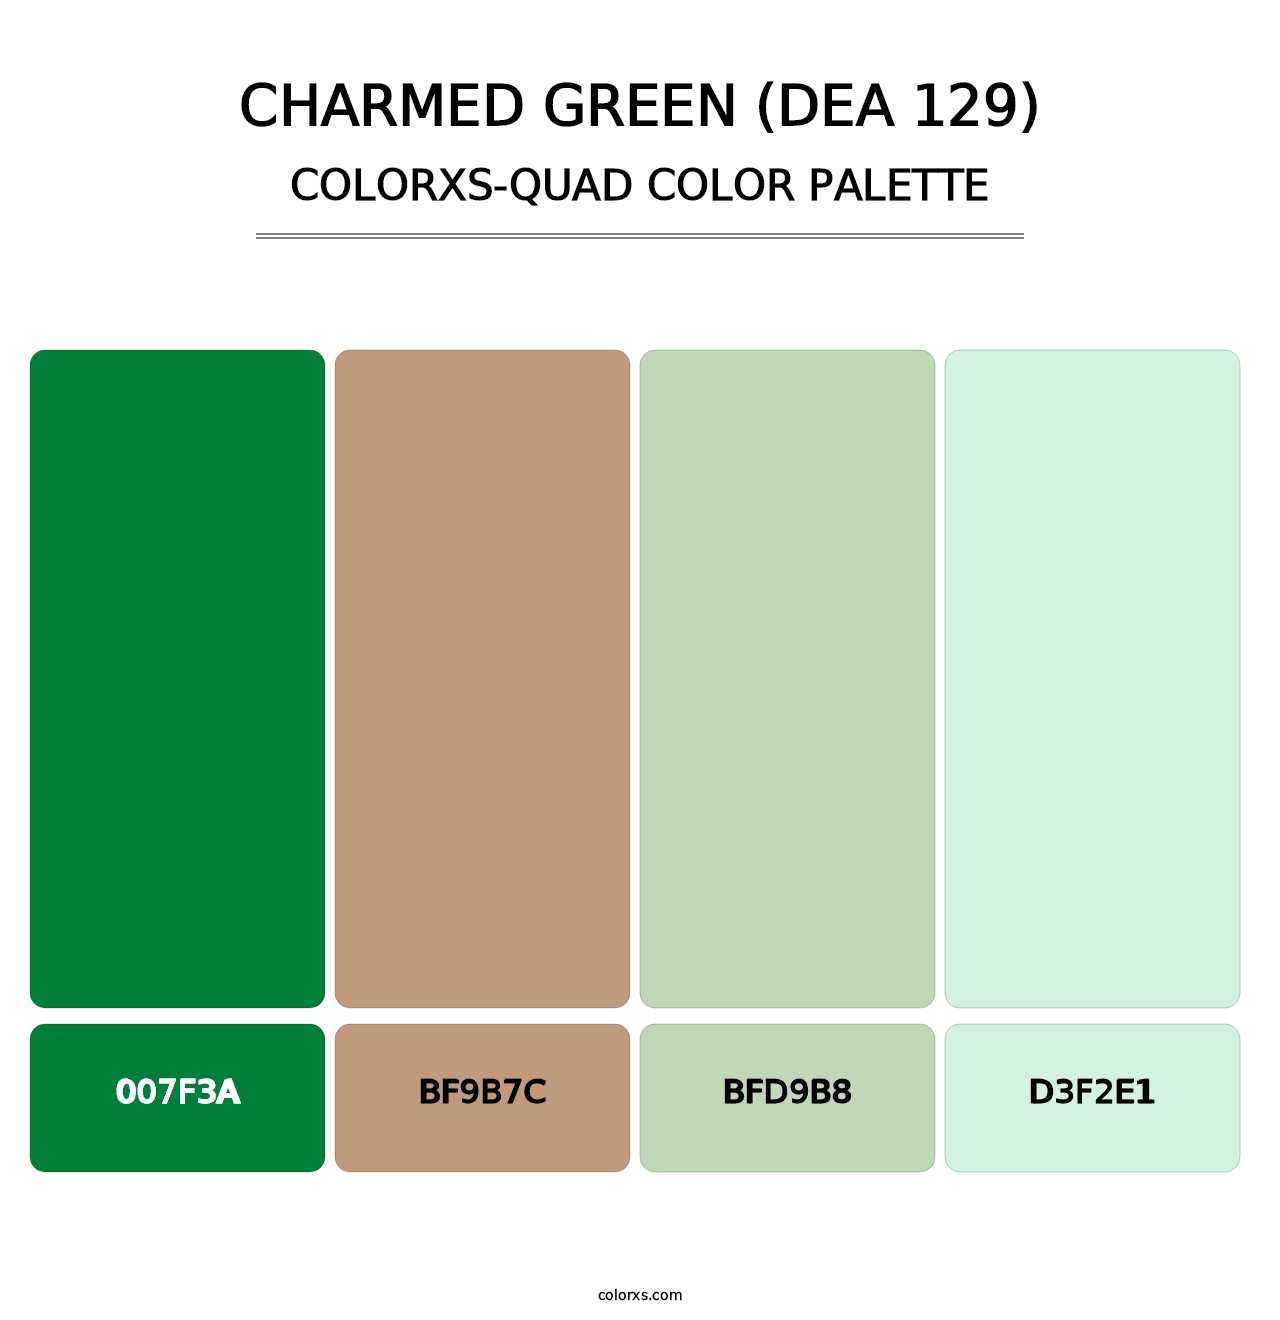 Charmed Green (DEA 129) - Colorxs Quad Palette